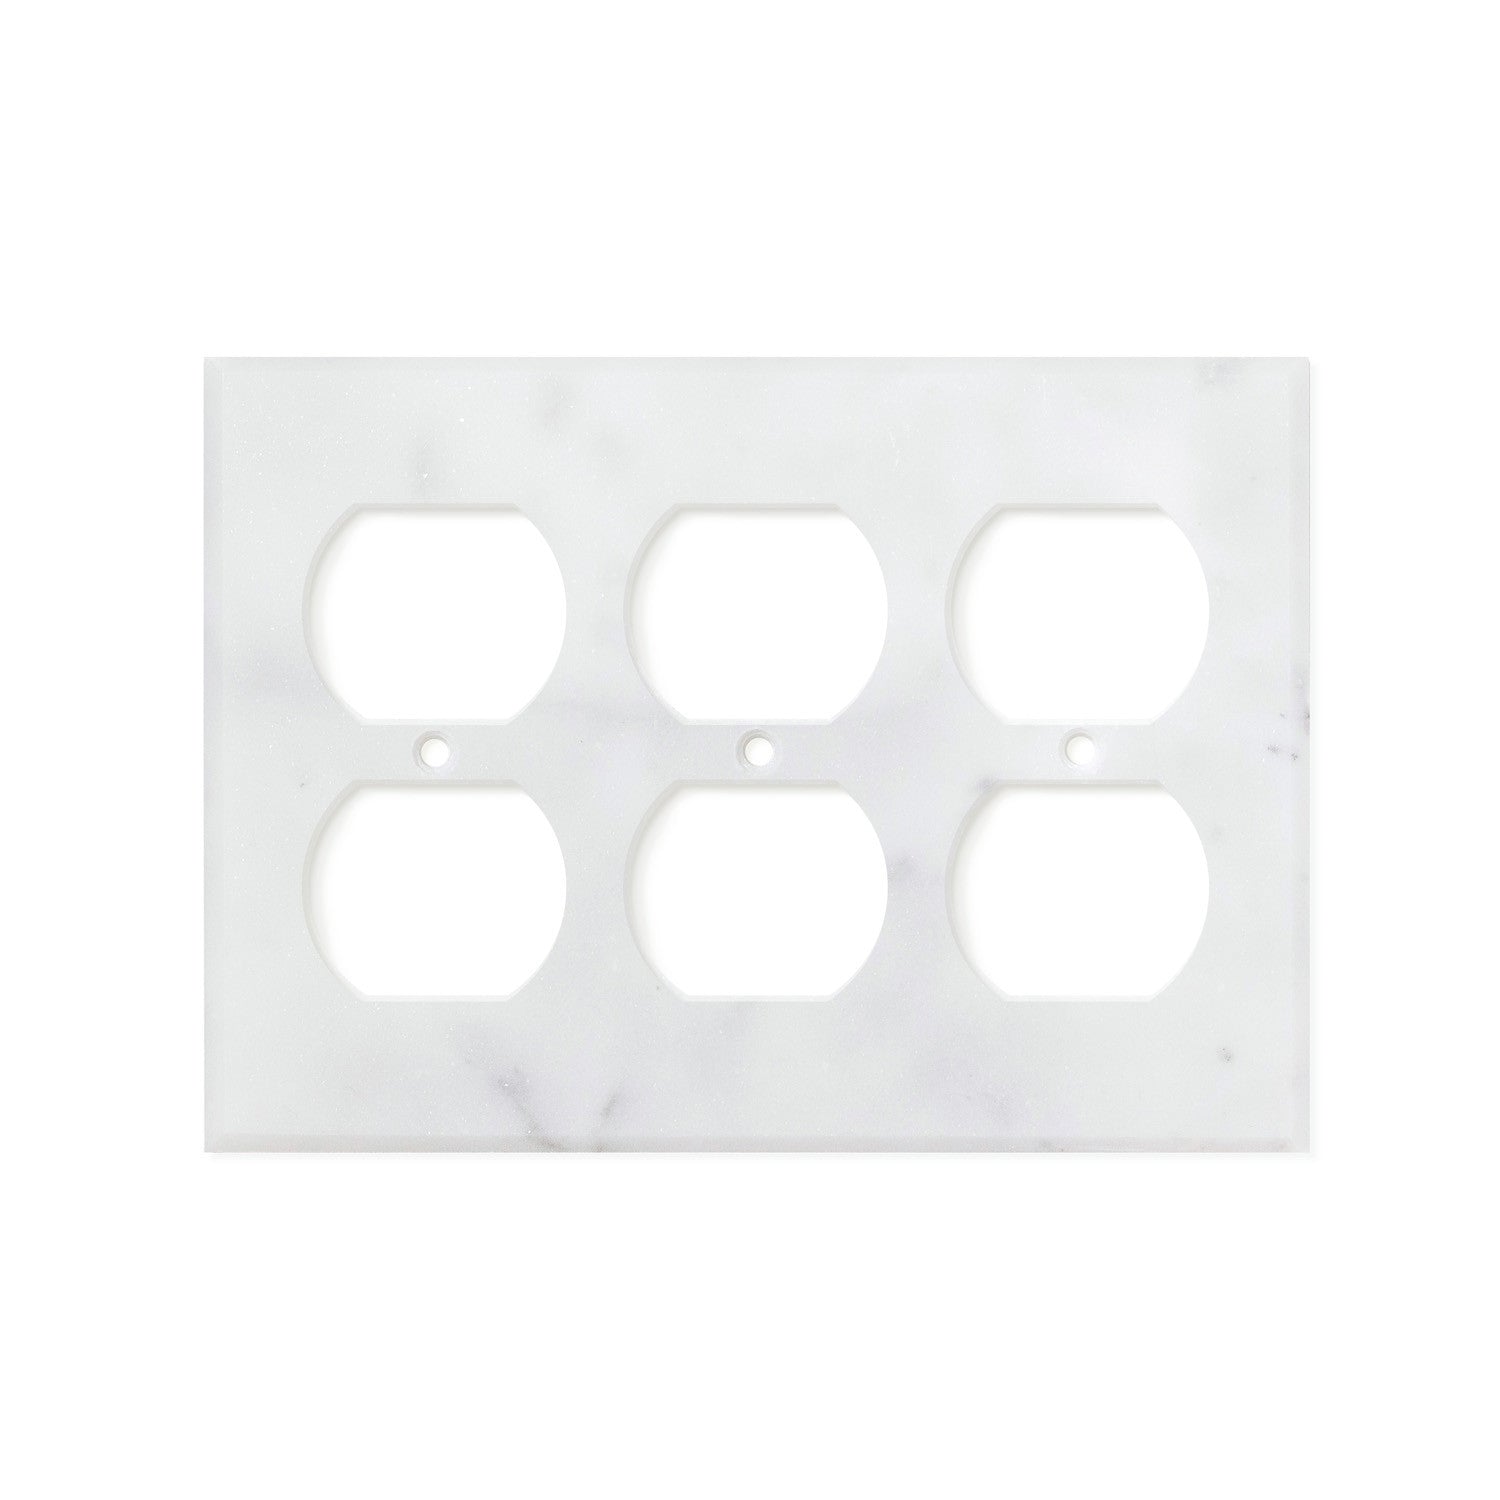 Bianco Carrara (Carrara White) Marble Switch Plate Cover, Polished (3 DUPLEX) - Tilephile